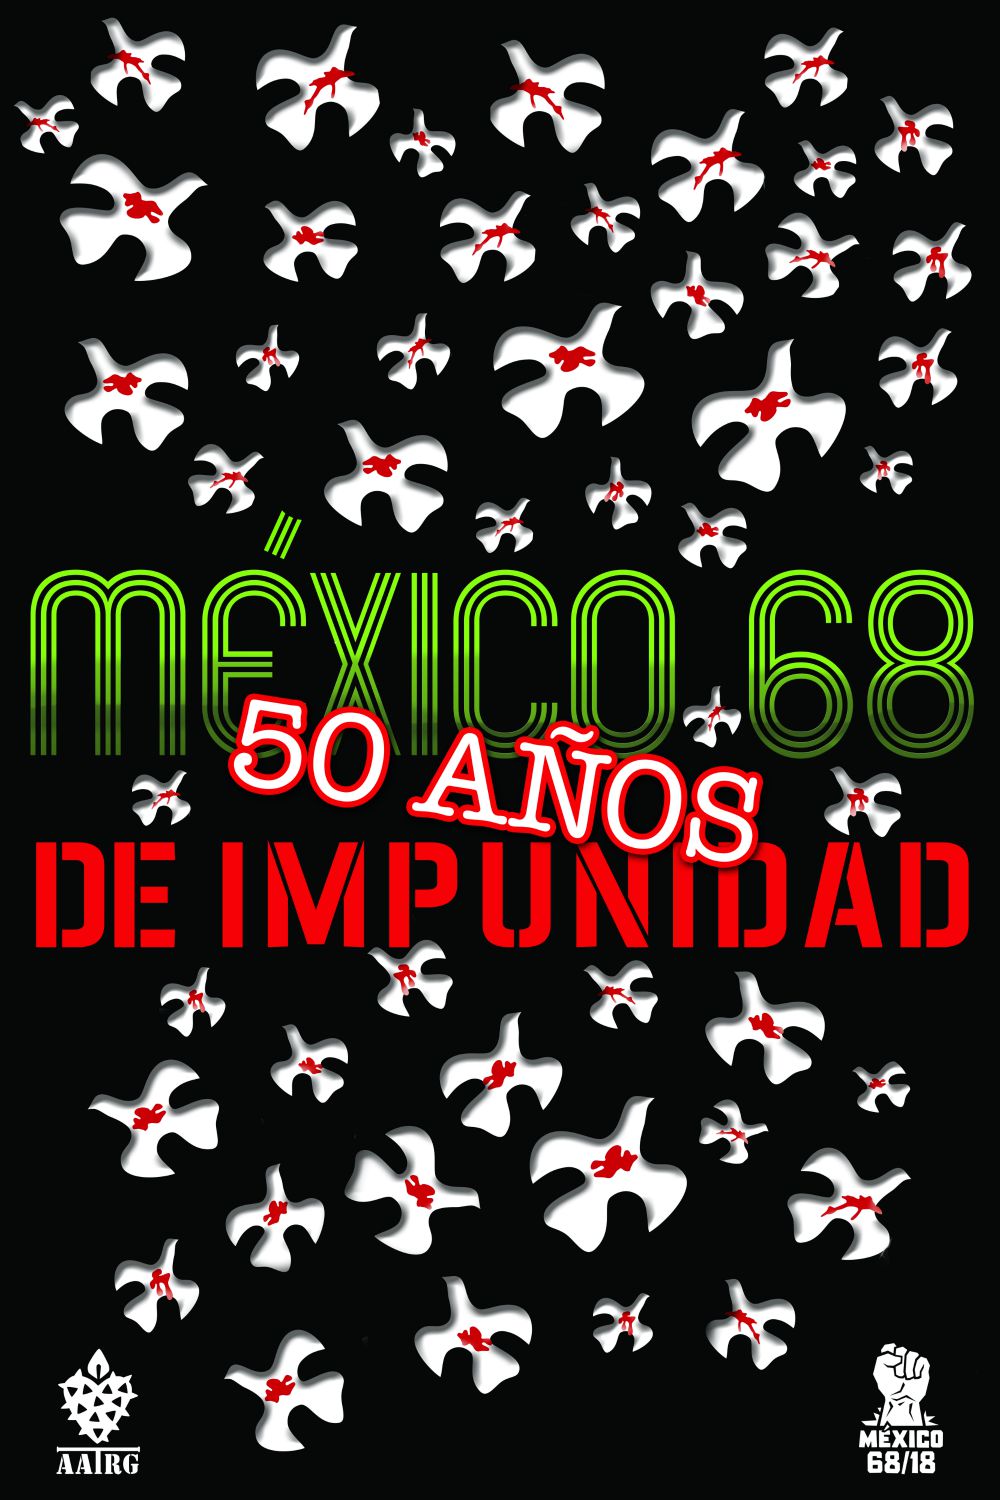 "México 68", Arnulfo Aquino